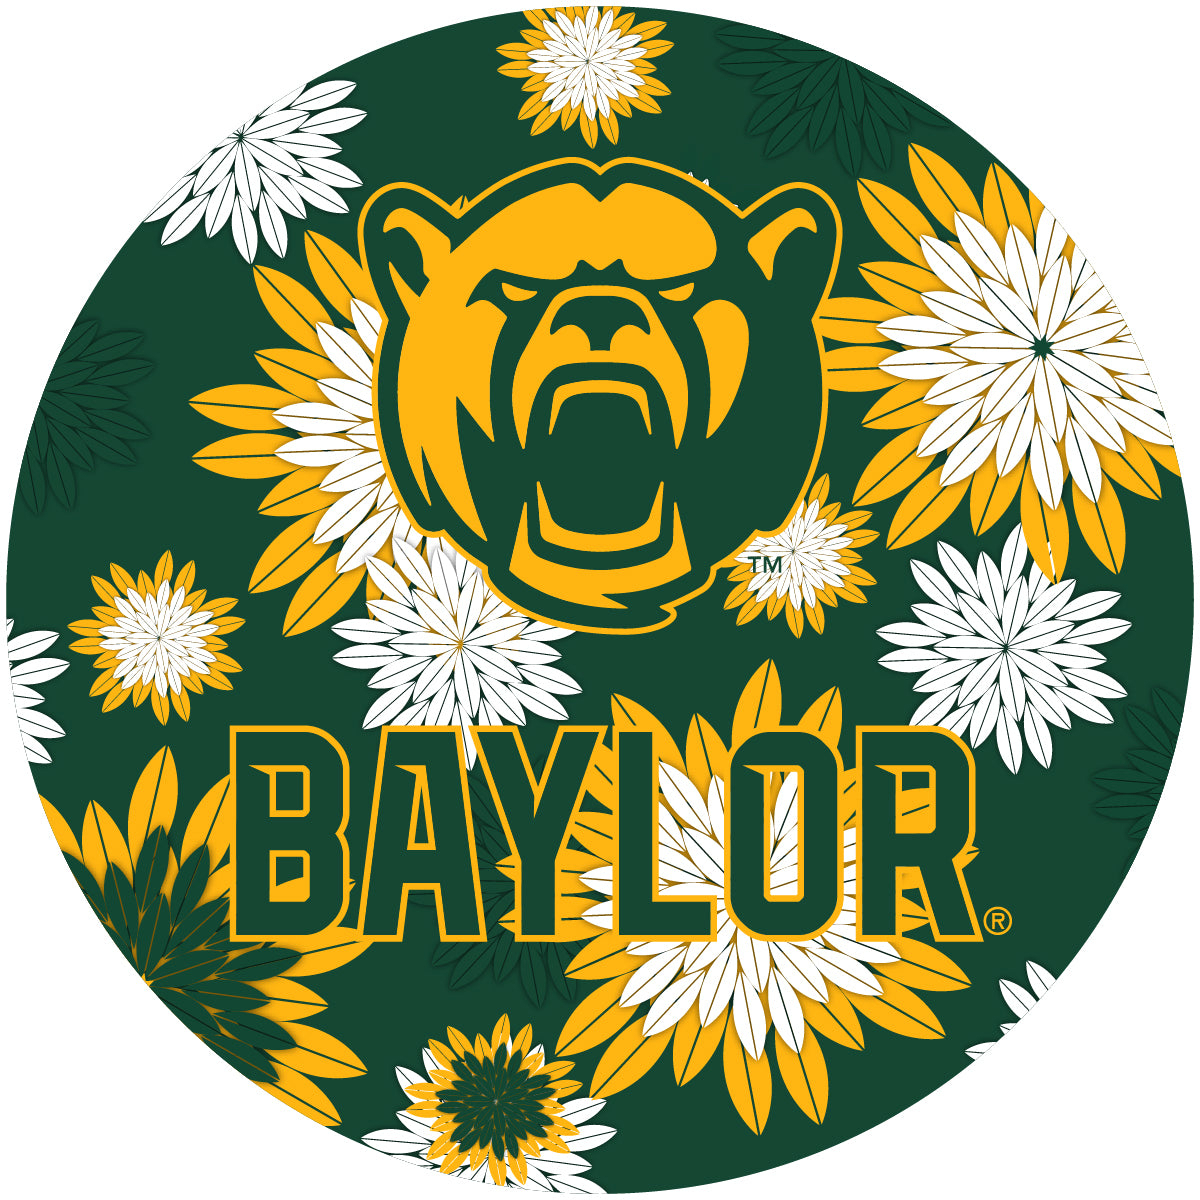 Baylor Bears 4 Inch Round Floral Magnet